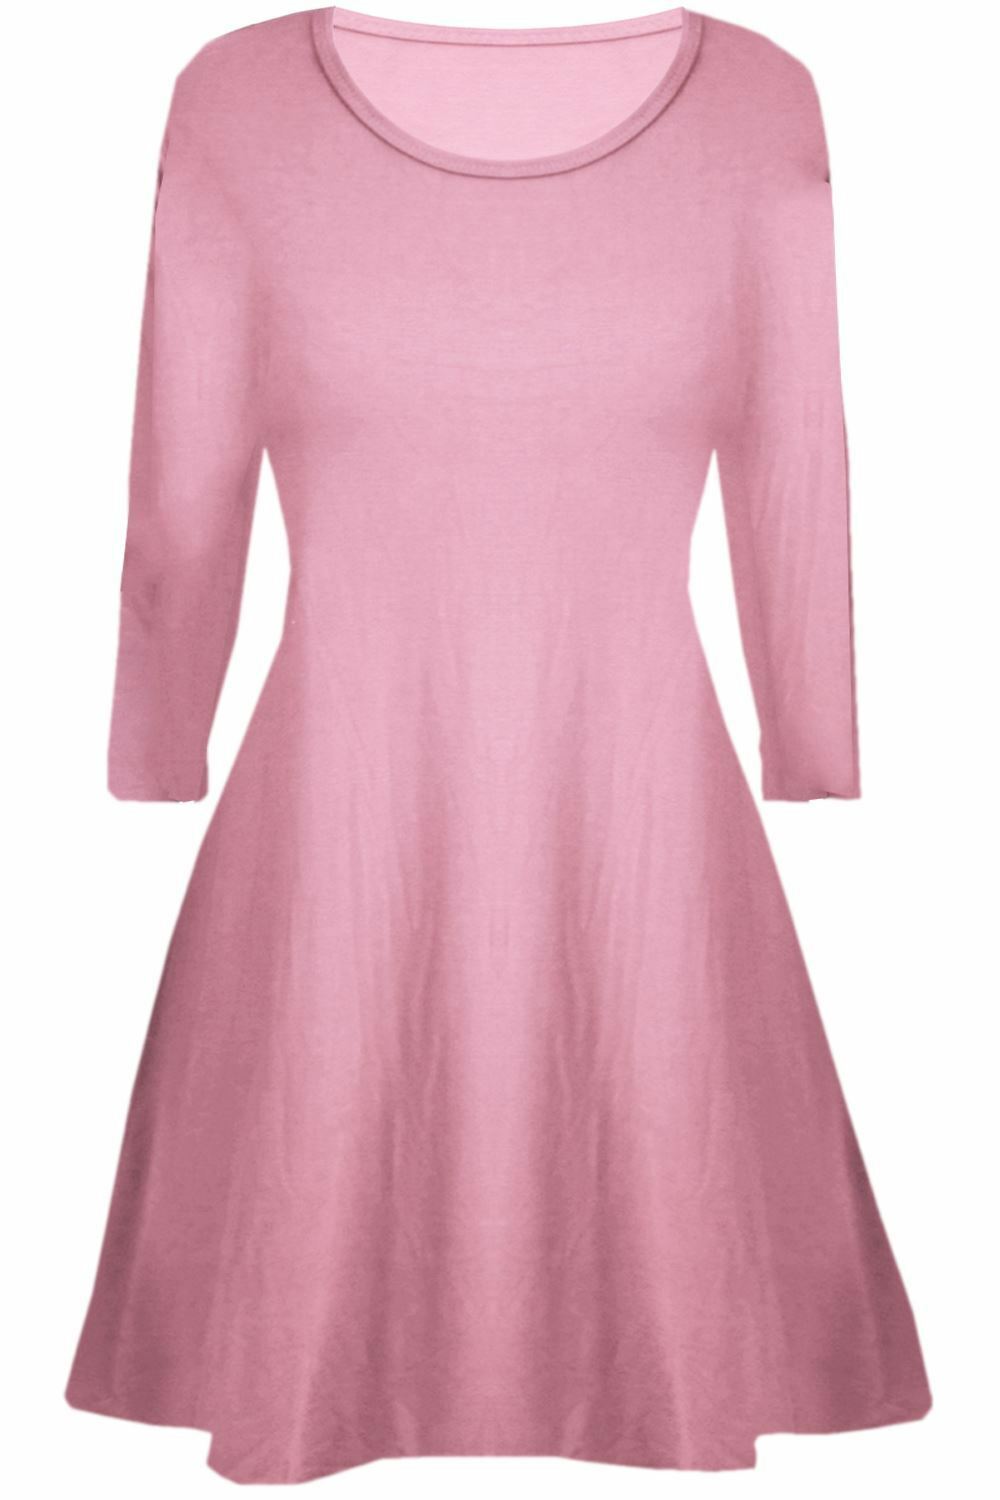 Children's Long Sleeve tea Pink Skater Dress Age 5 To 13, 100% Polyester